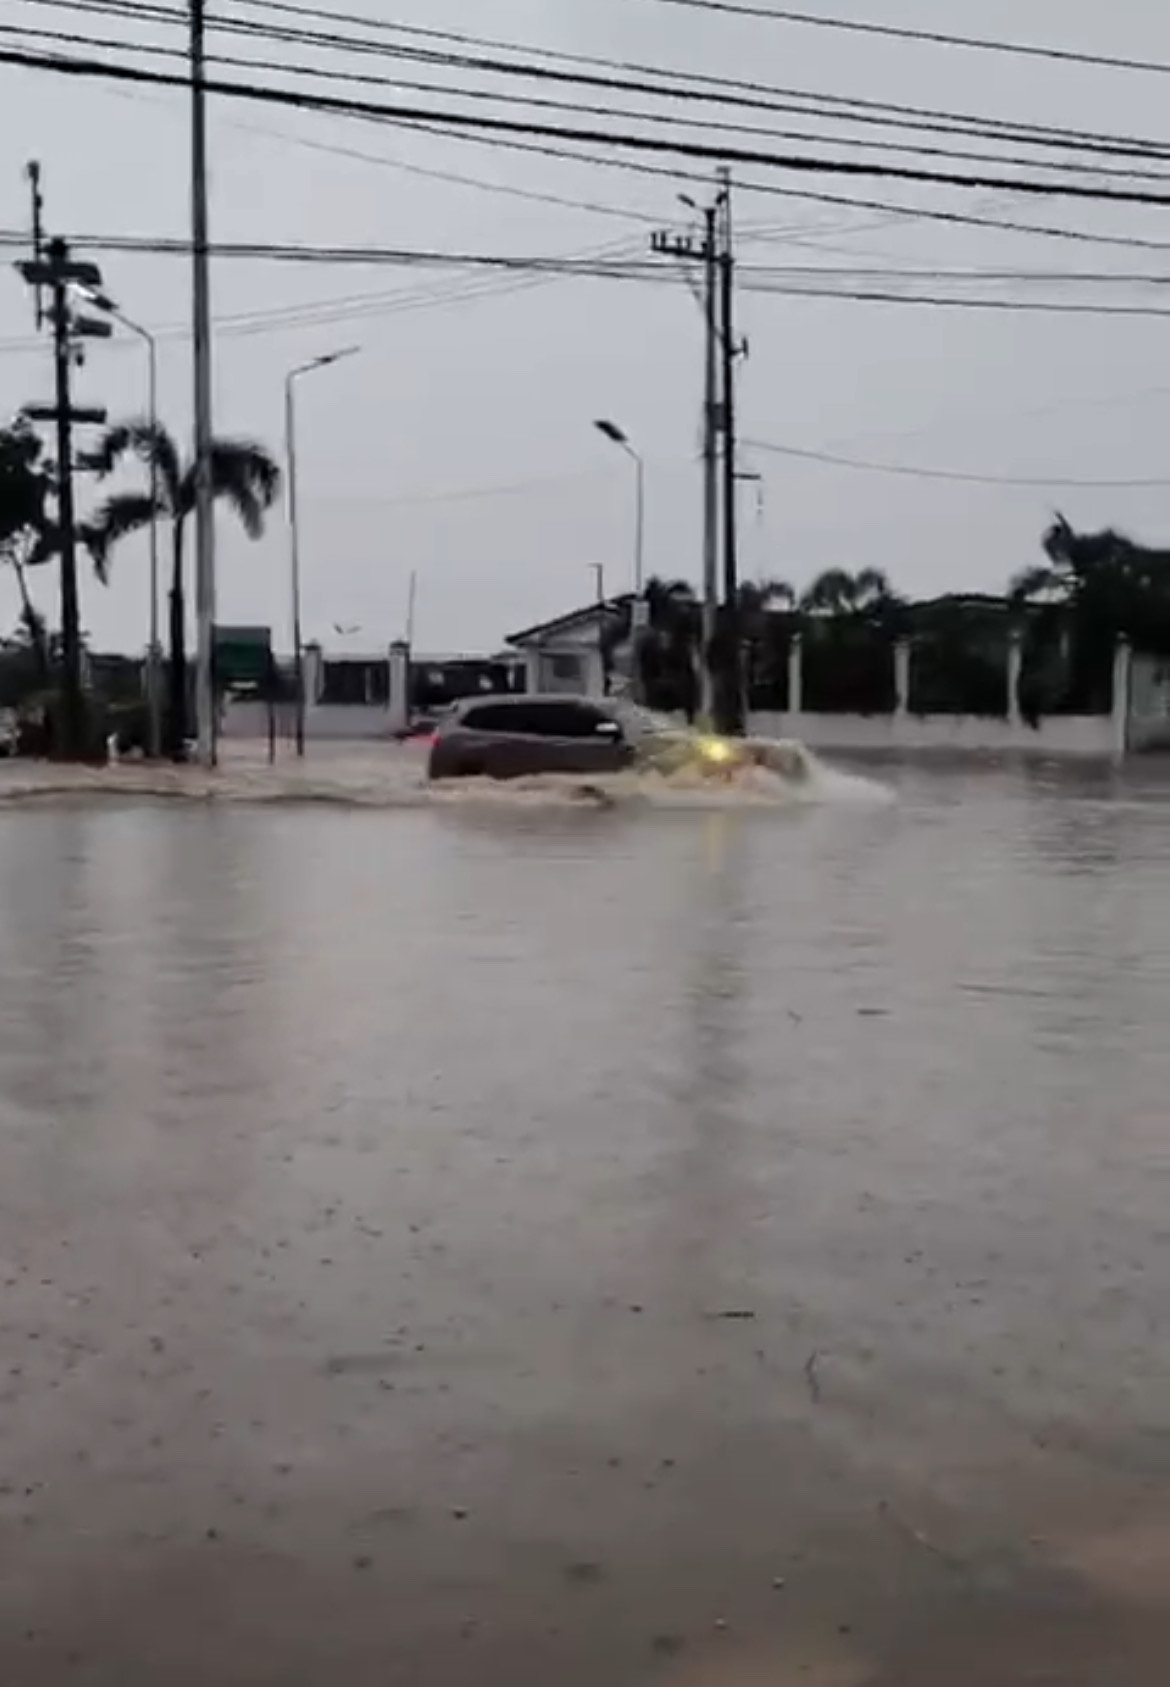 A sports utility vehicle breezes through the floods.